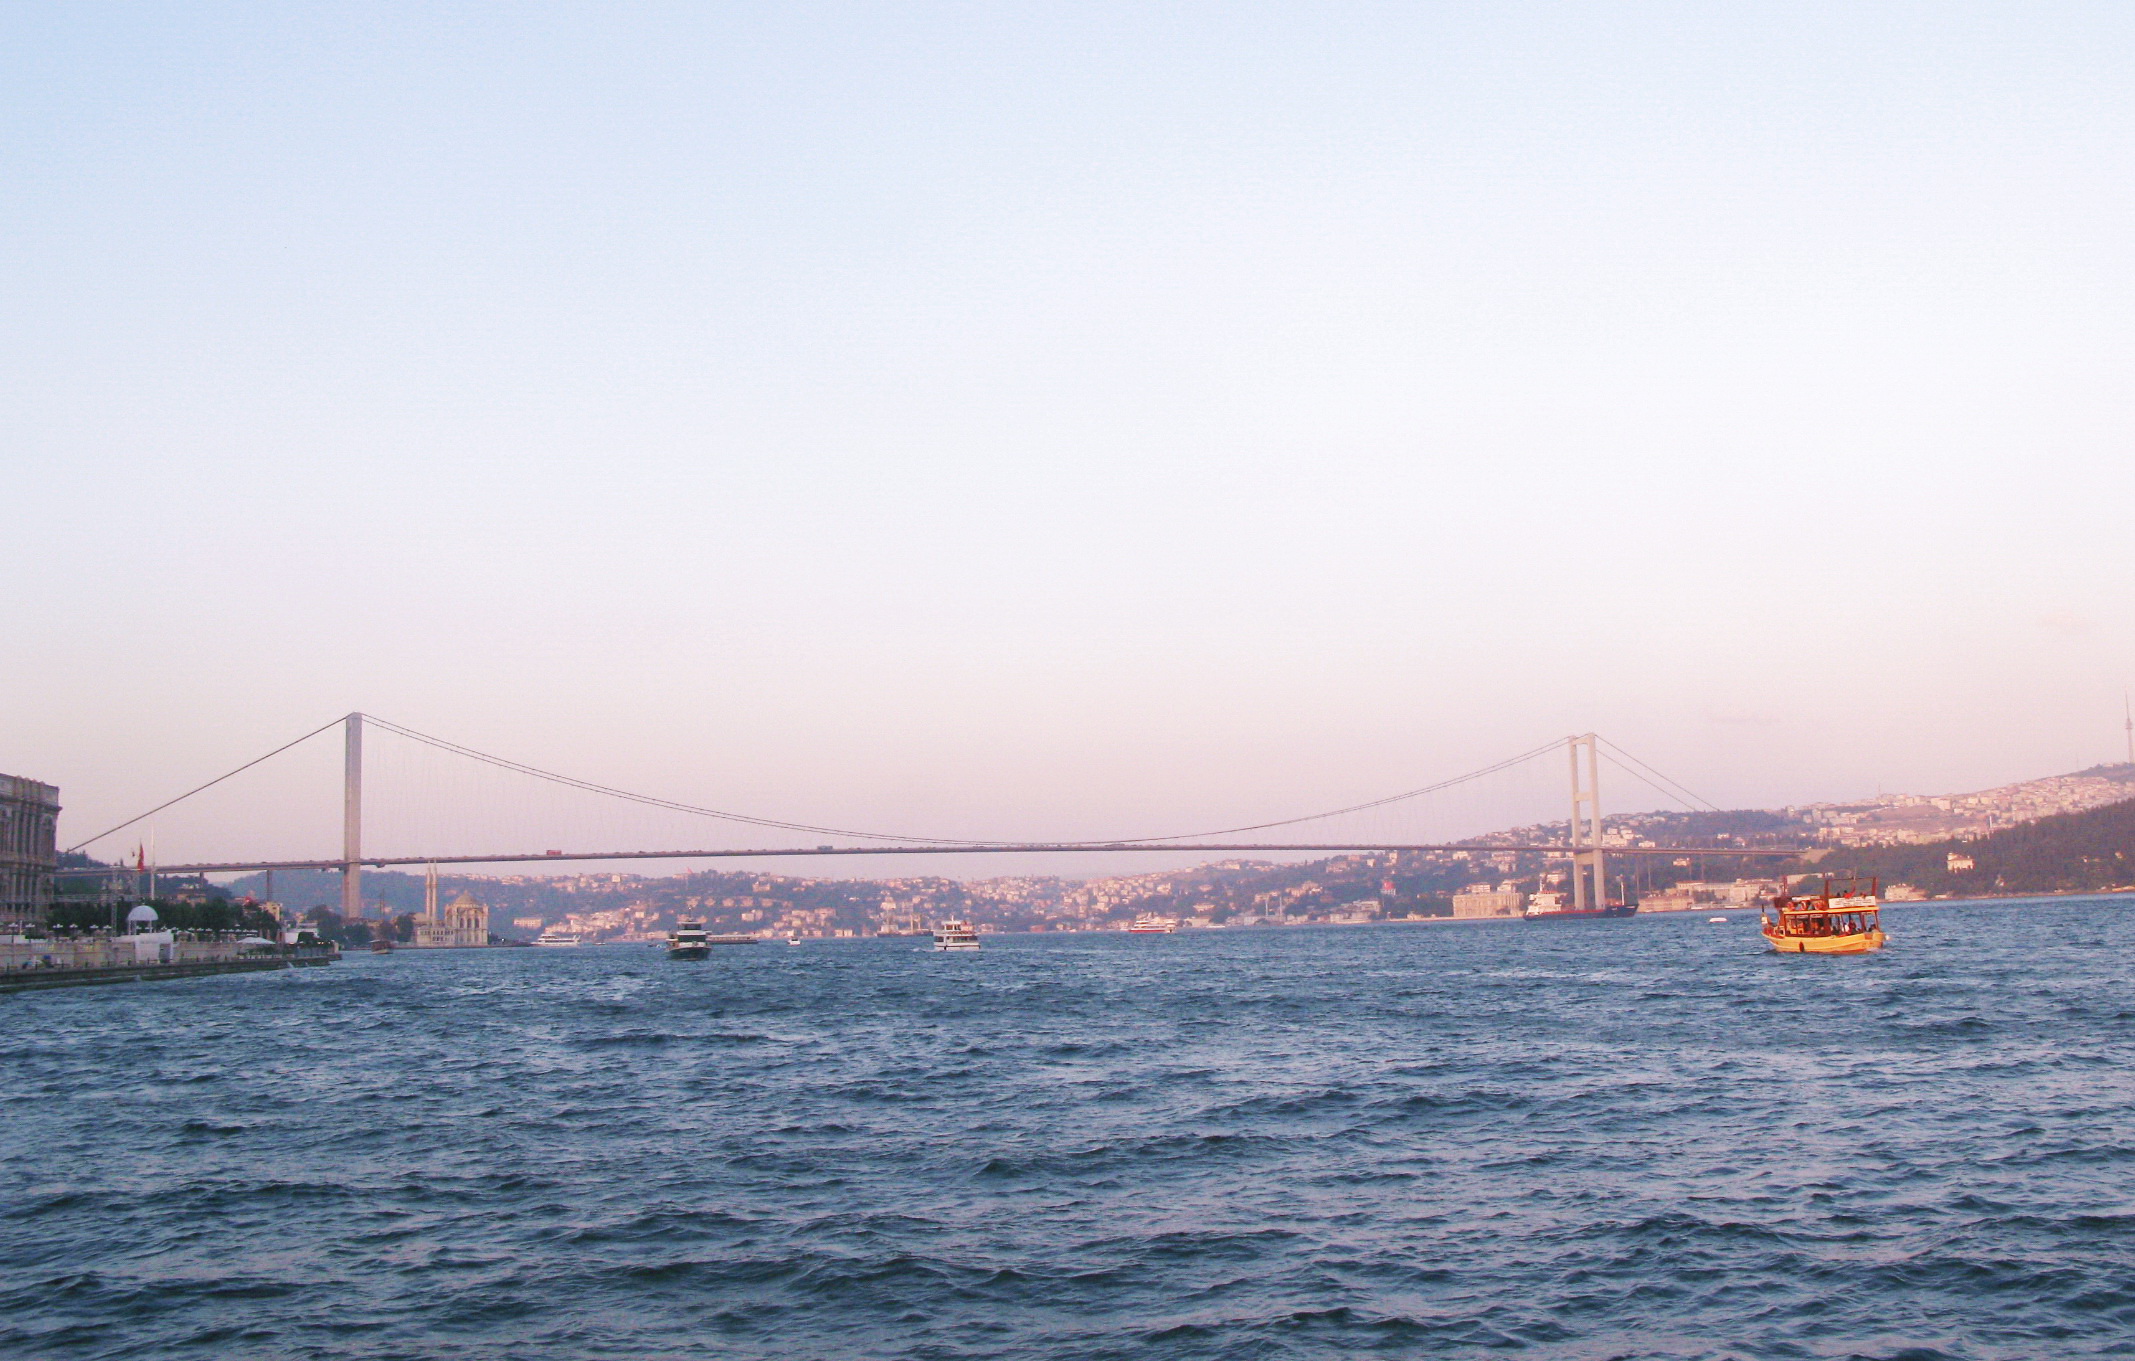 Мост, соединяющий Европу с Азией - Стамбул, Турция фото #4524